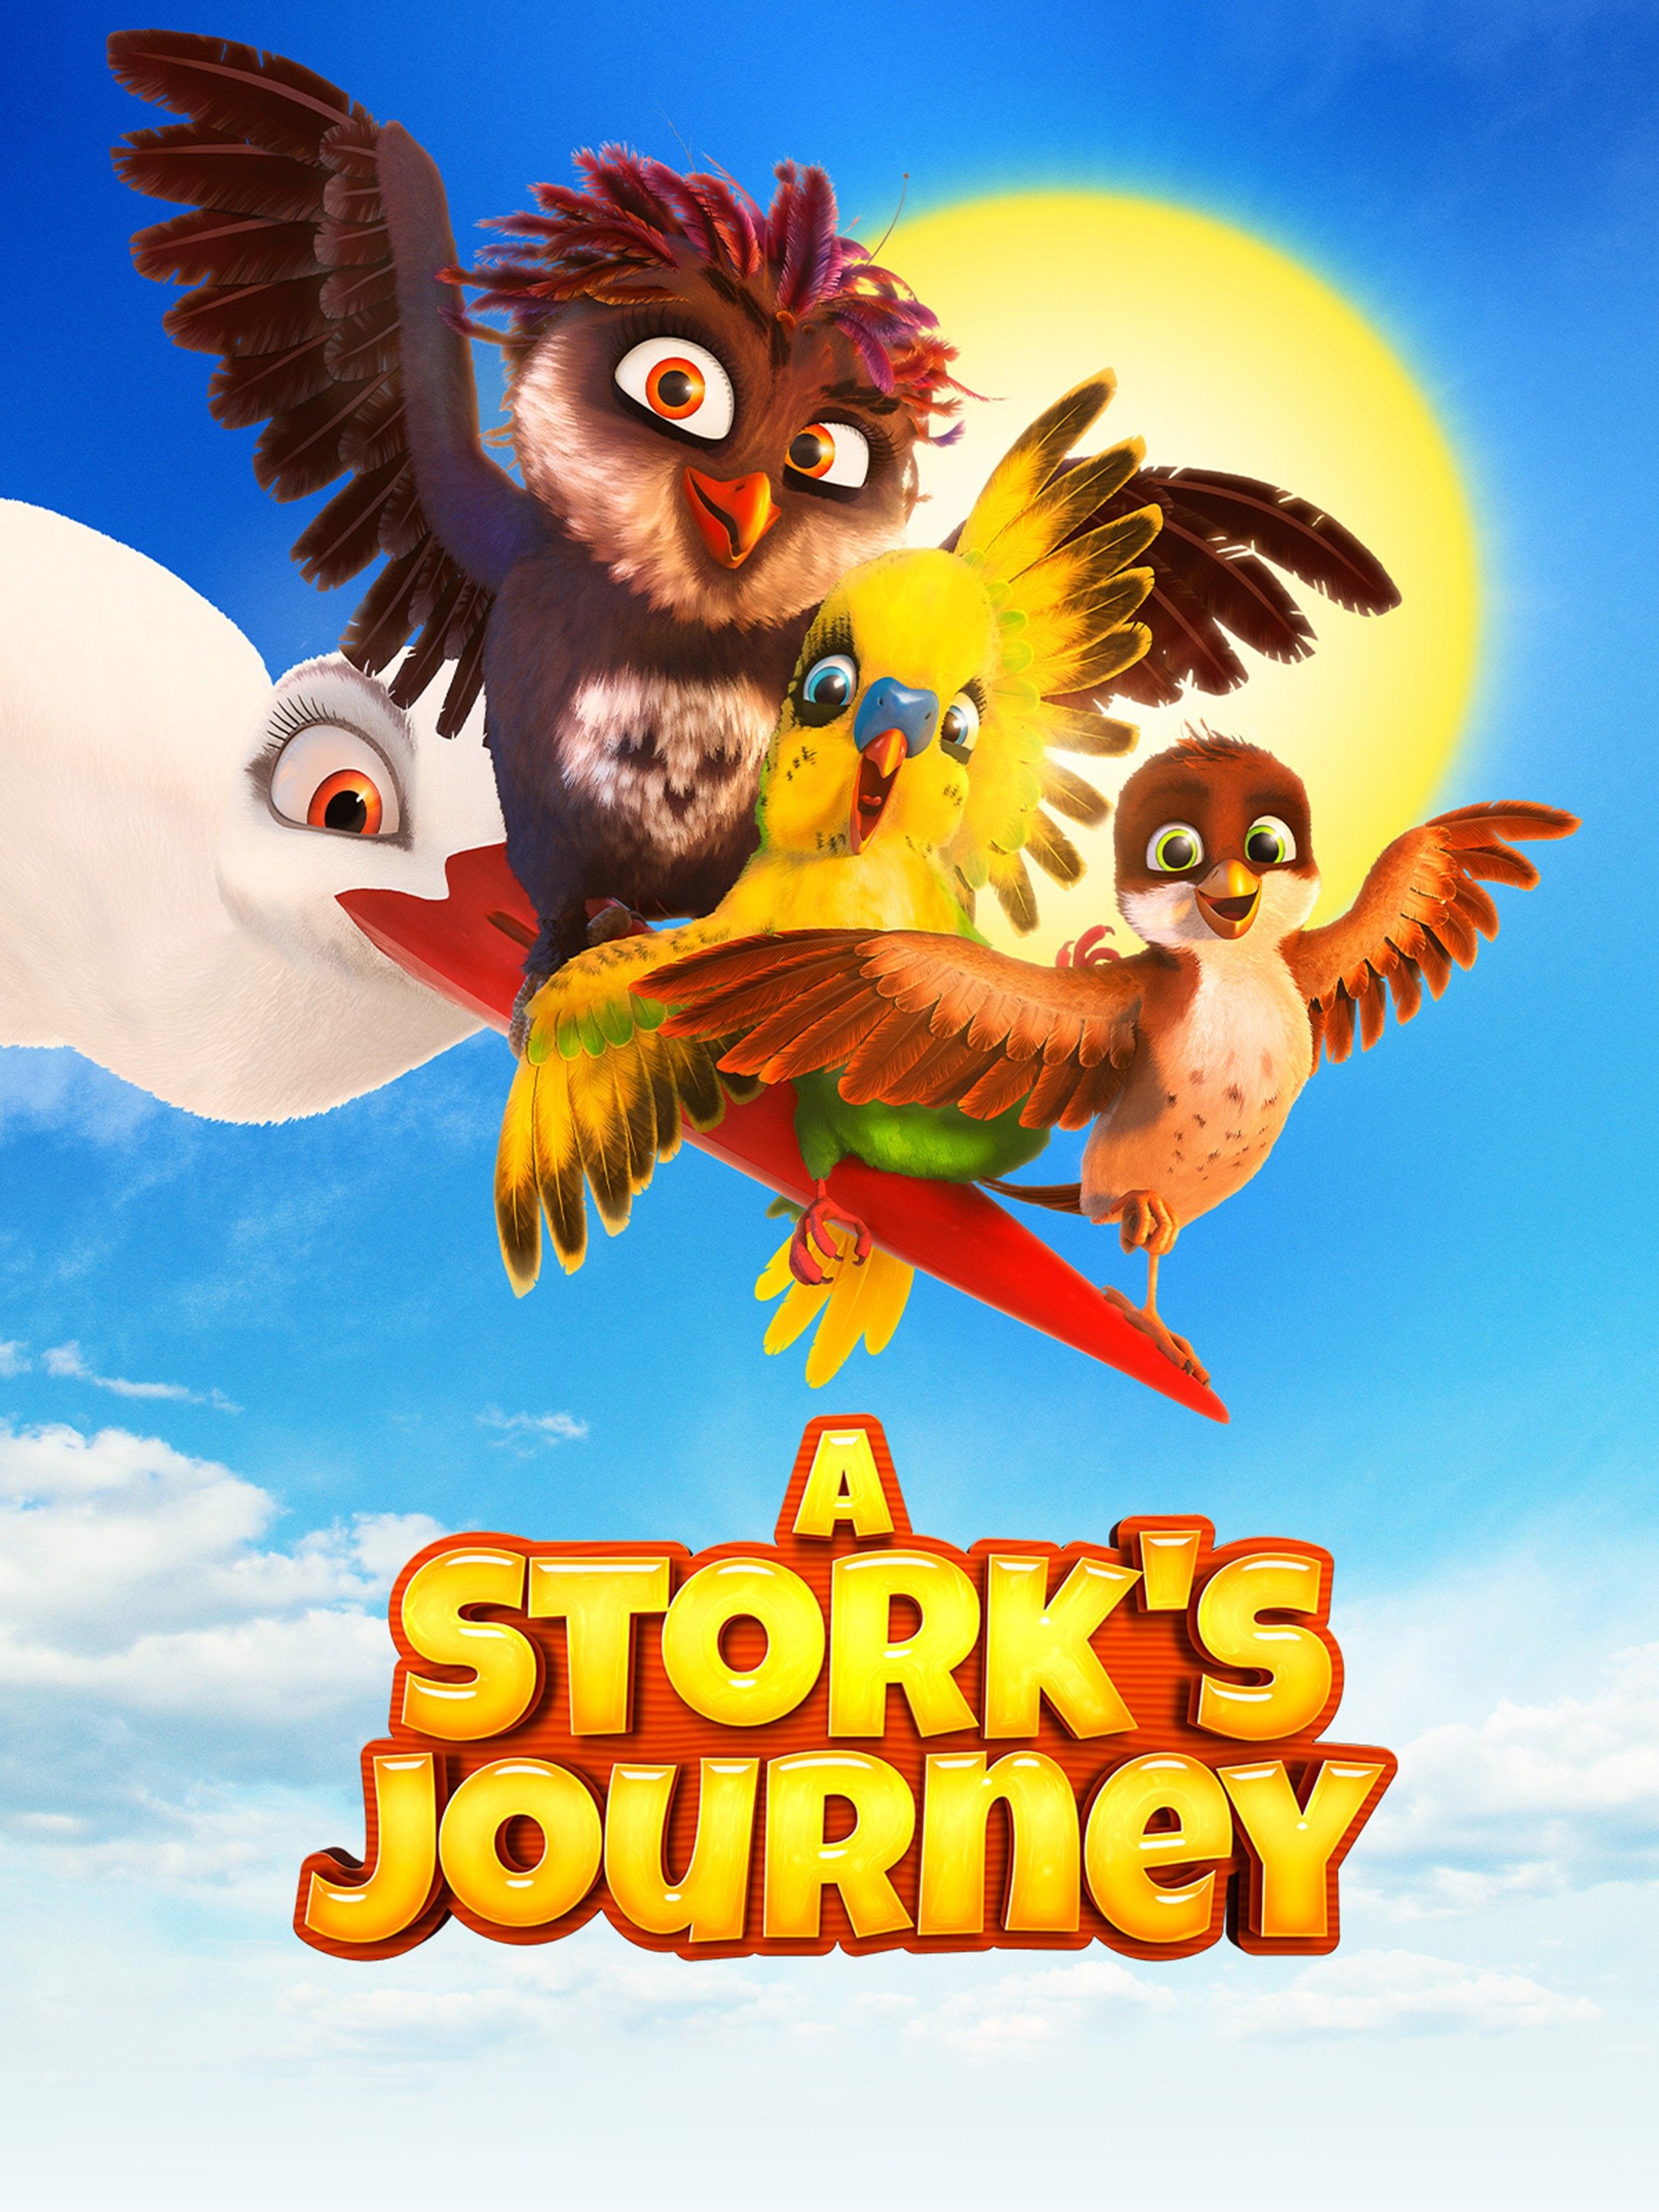 a stork's journey film